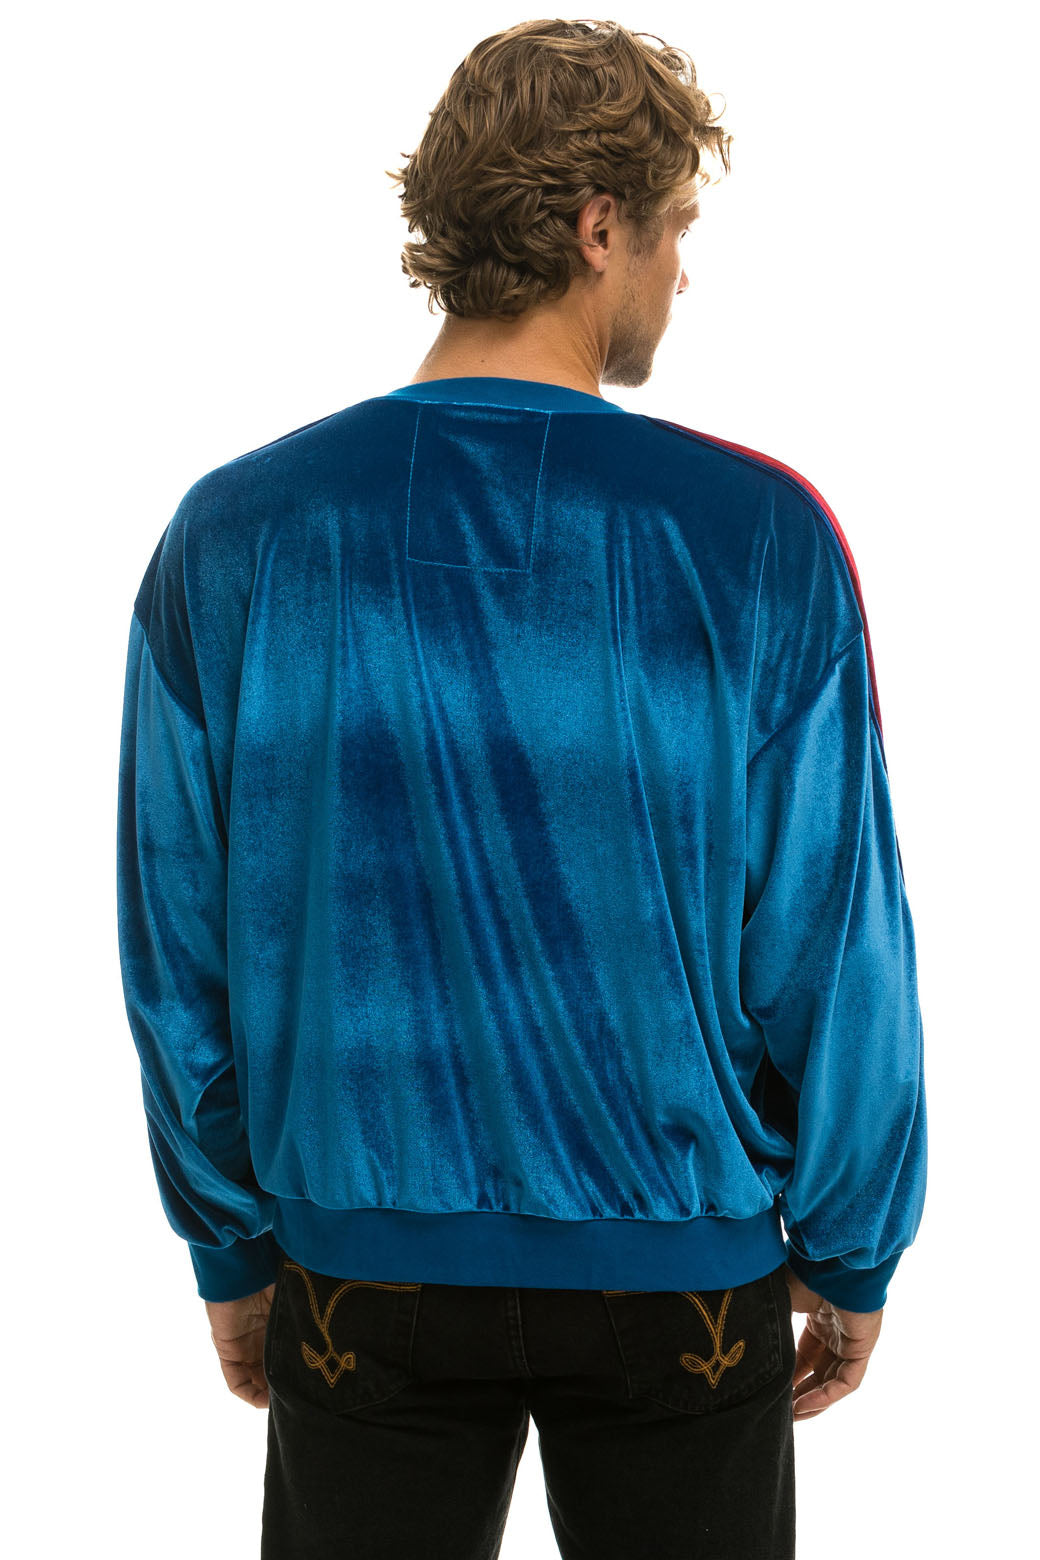 CLASSIC VELVET RELAXED SWEATSHIRT - VINTAGE BLUE Sweatshirt Aviator Nation 